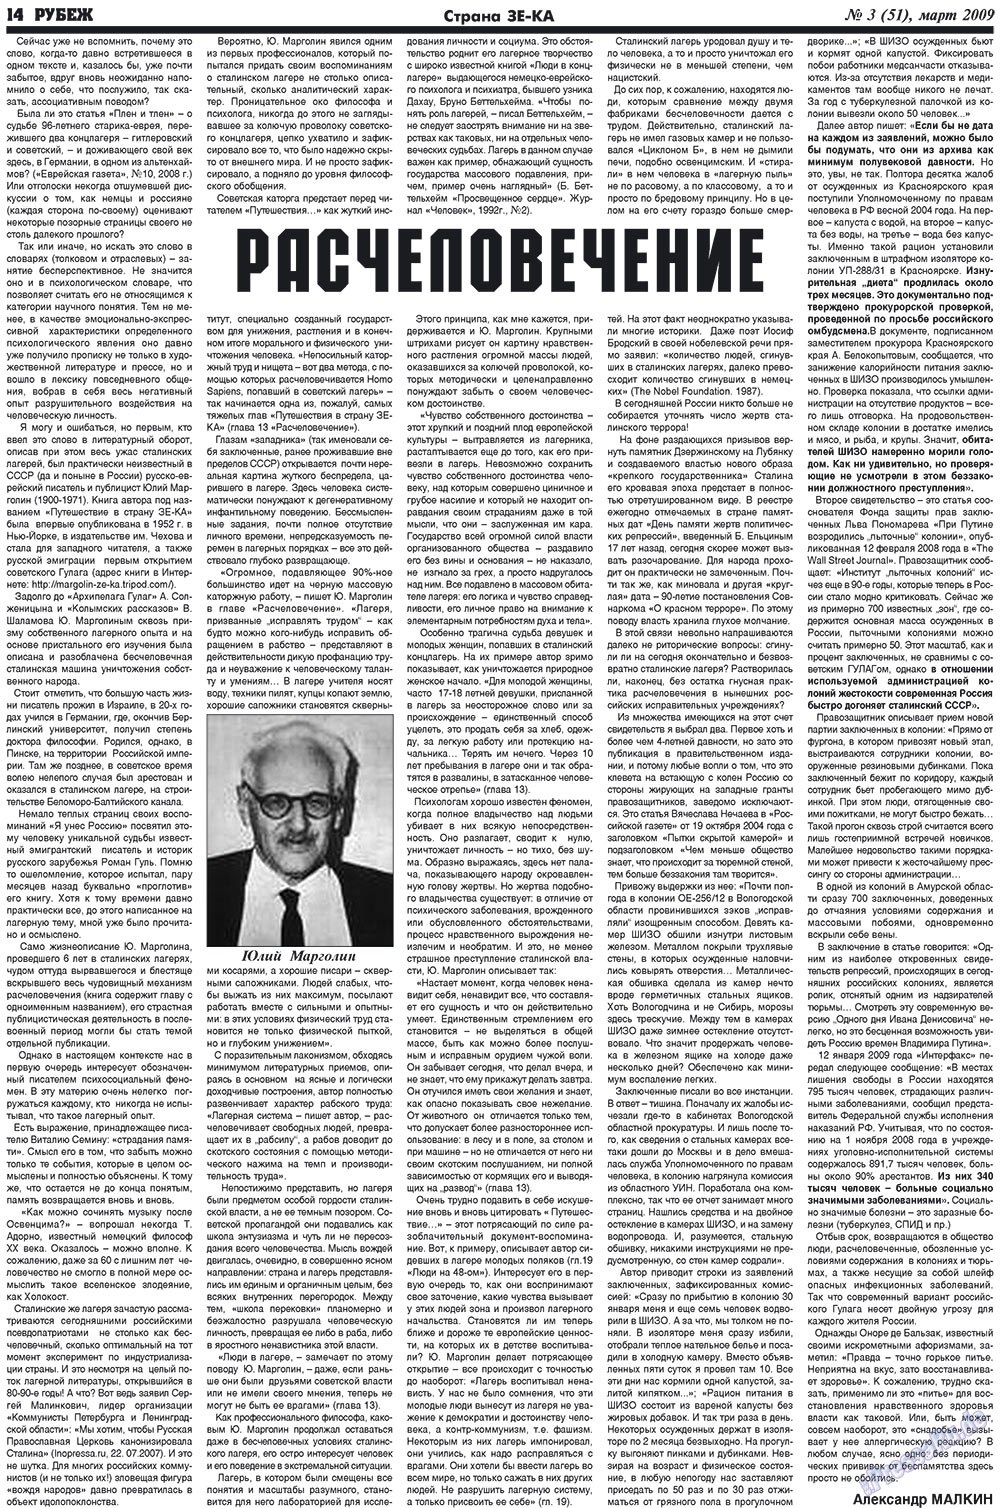 Рубеж, газета. 2009 №3 стр.14